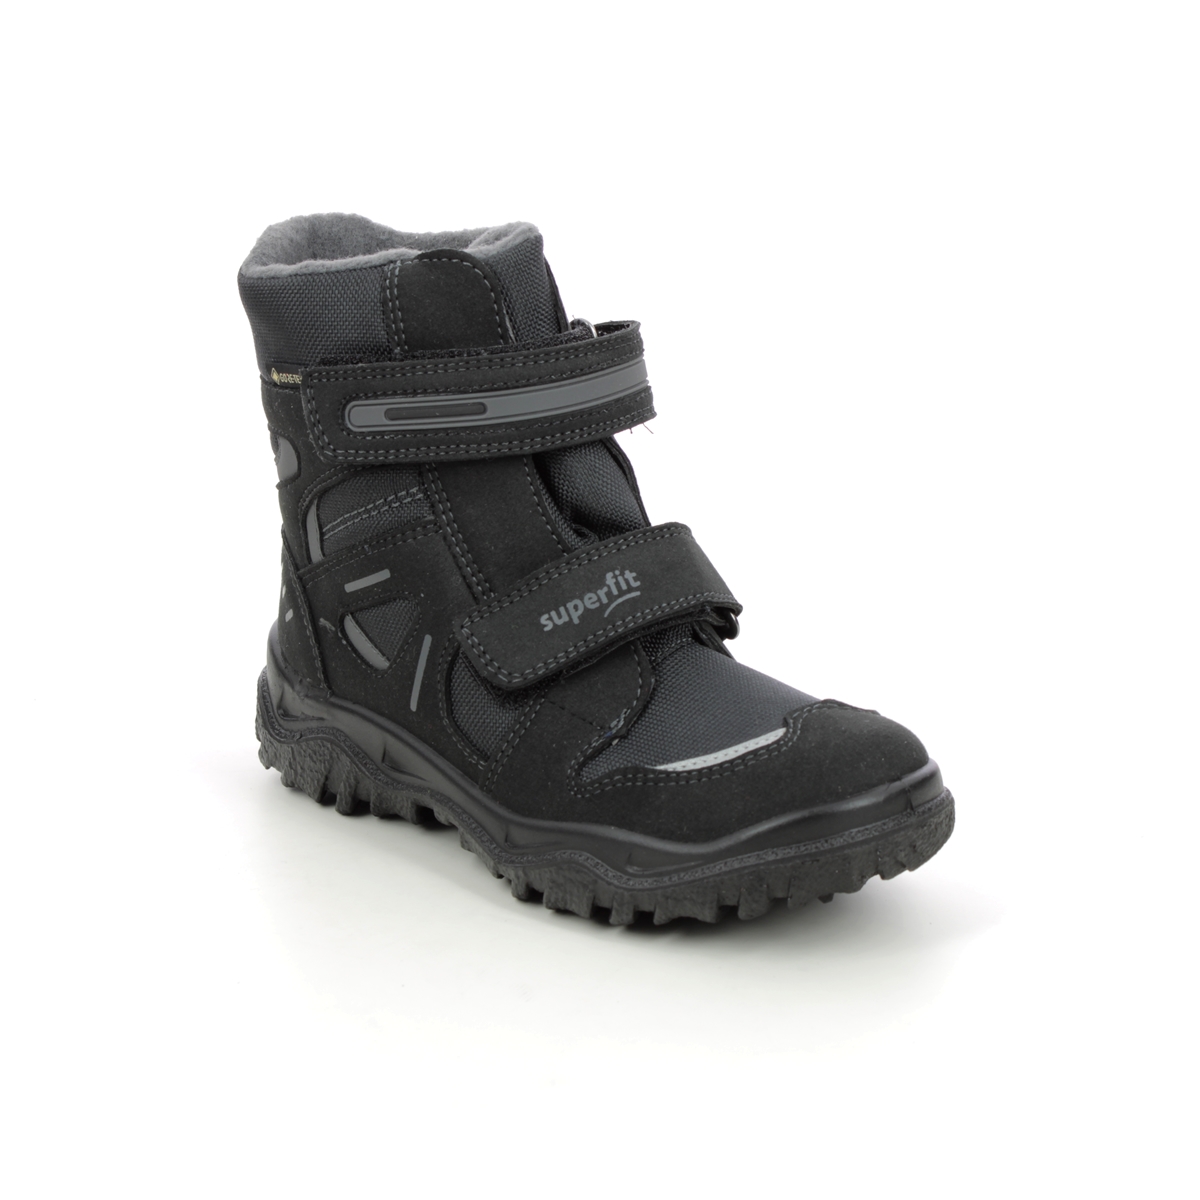 Superfit Husky Jnr Gore Black Kids Boys Boots 0809080-0600 In Size 32 In Plain Black For kids